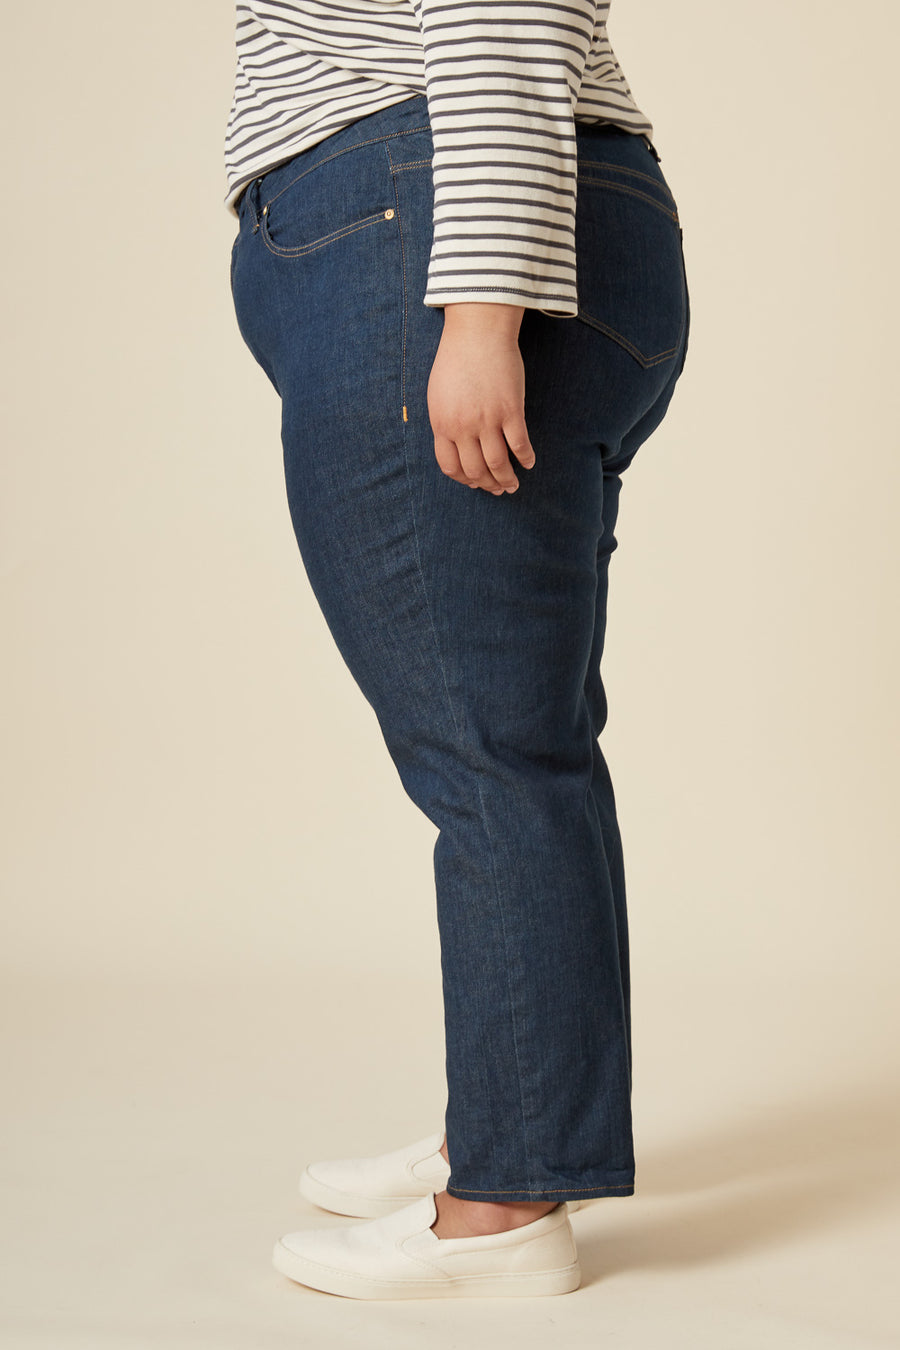 Ginger Jeans Pattern | Straight + Skinny Leg | Closet Core Patterns